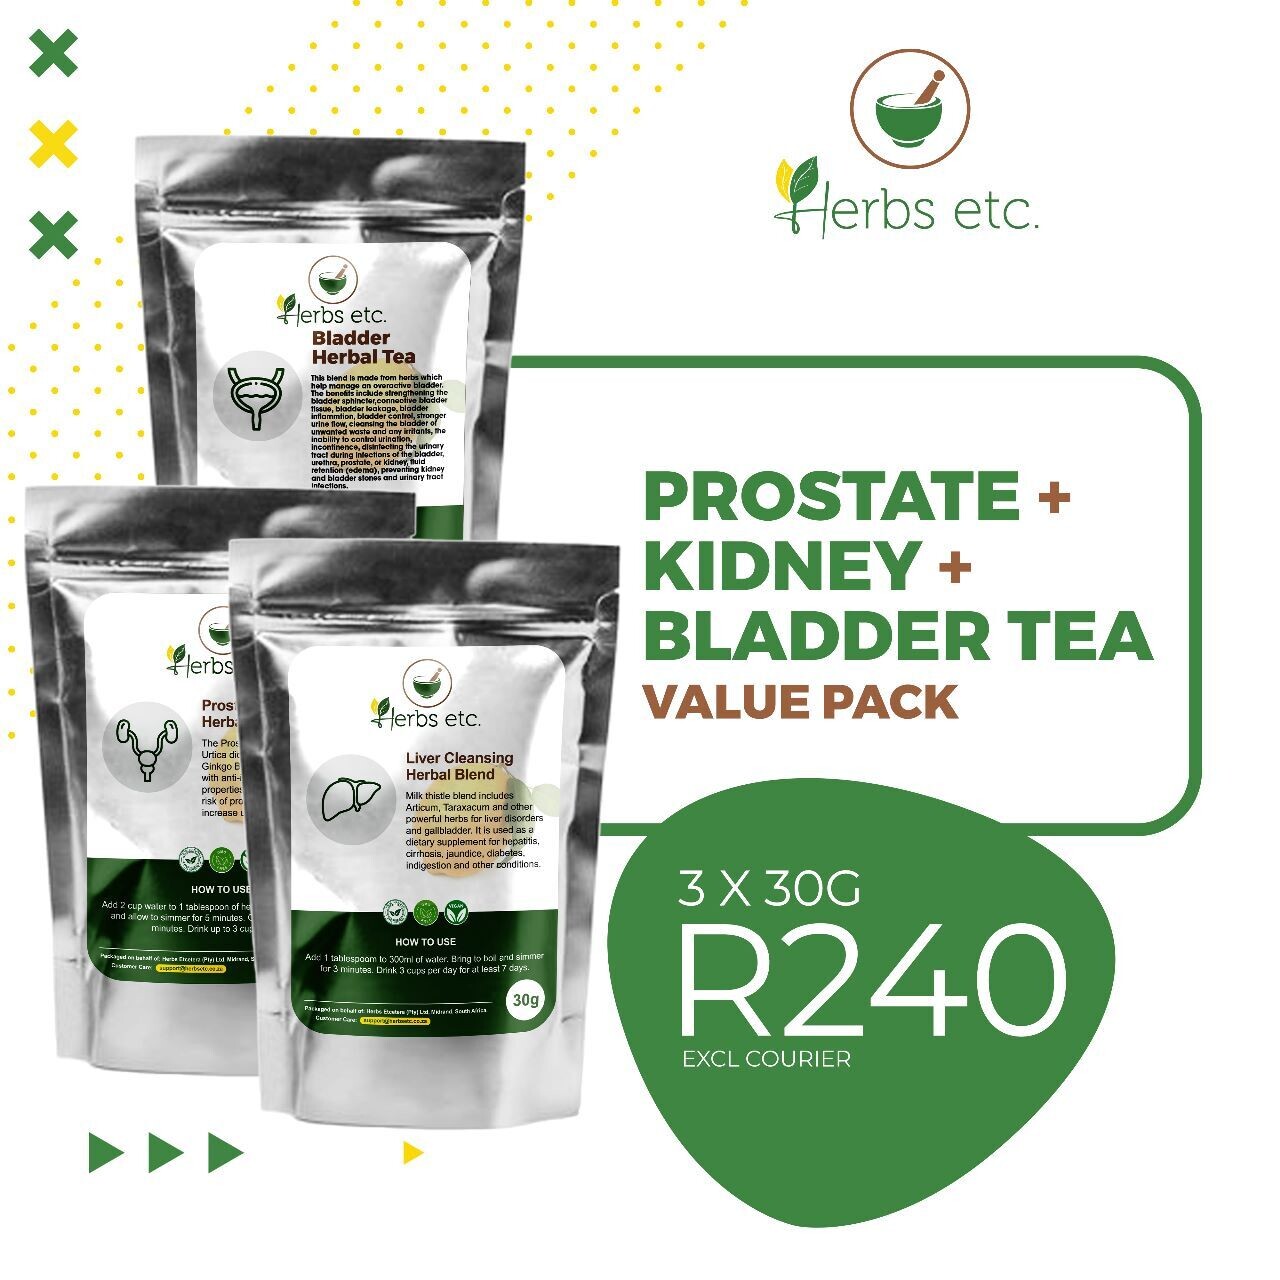 Prostate + Kidney + Bladder Tea